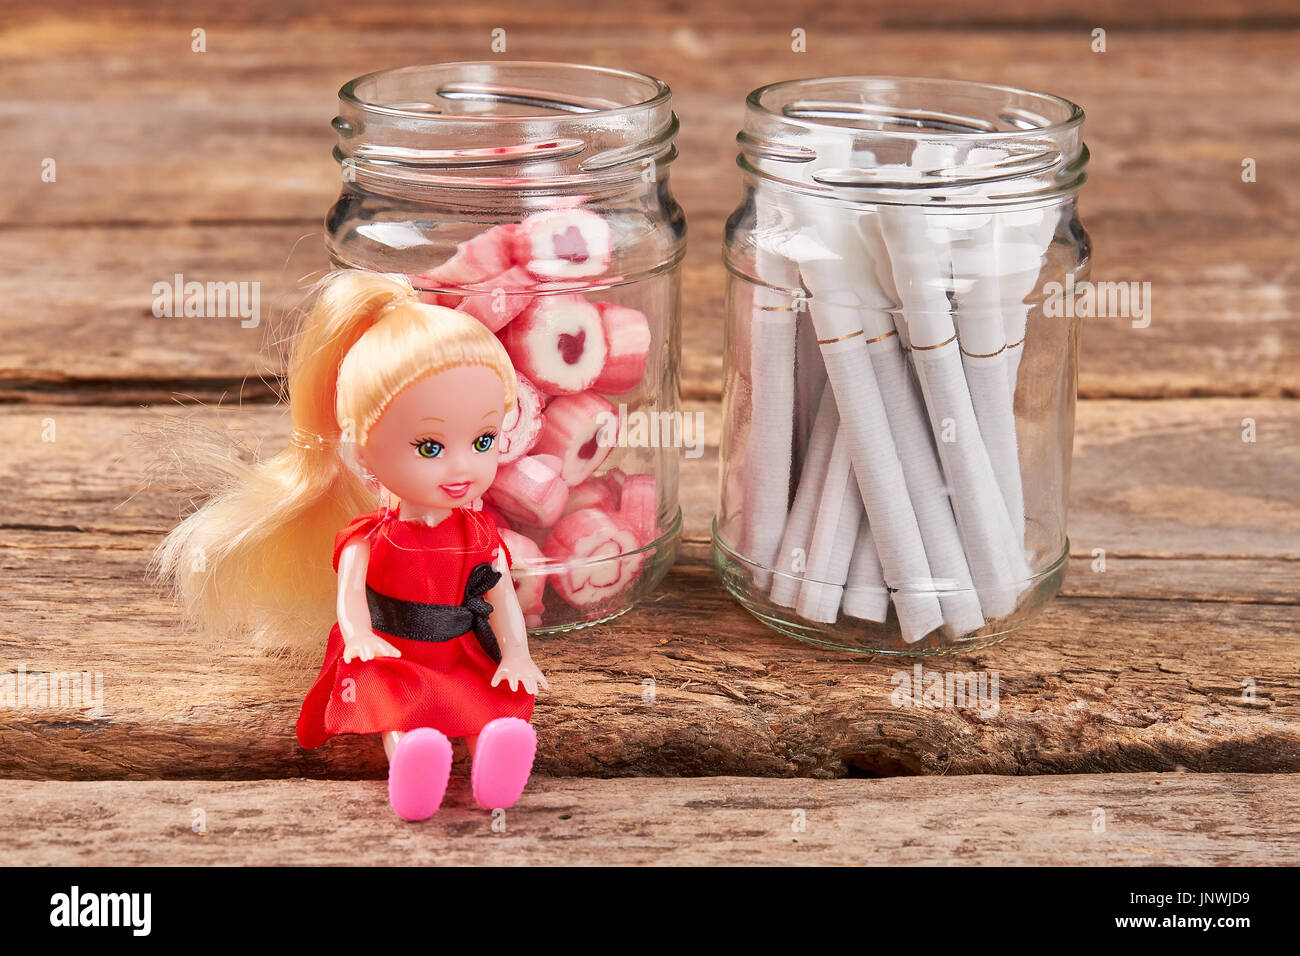 Toy doll sitting near jars. Stock Photo